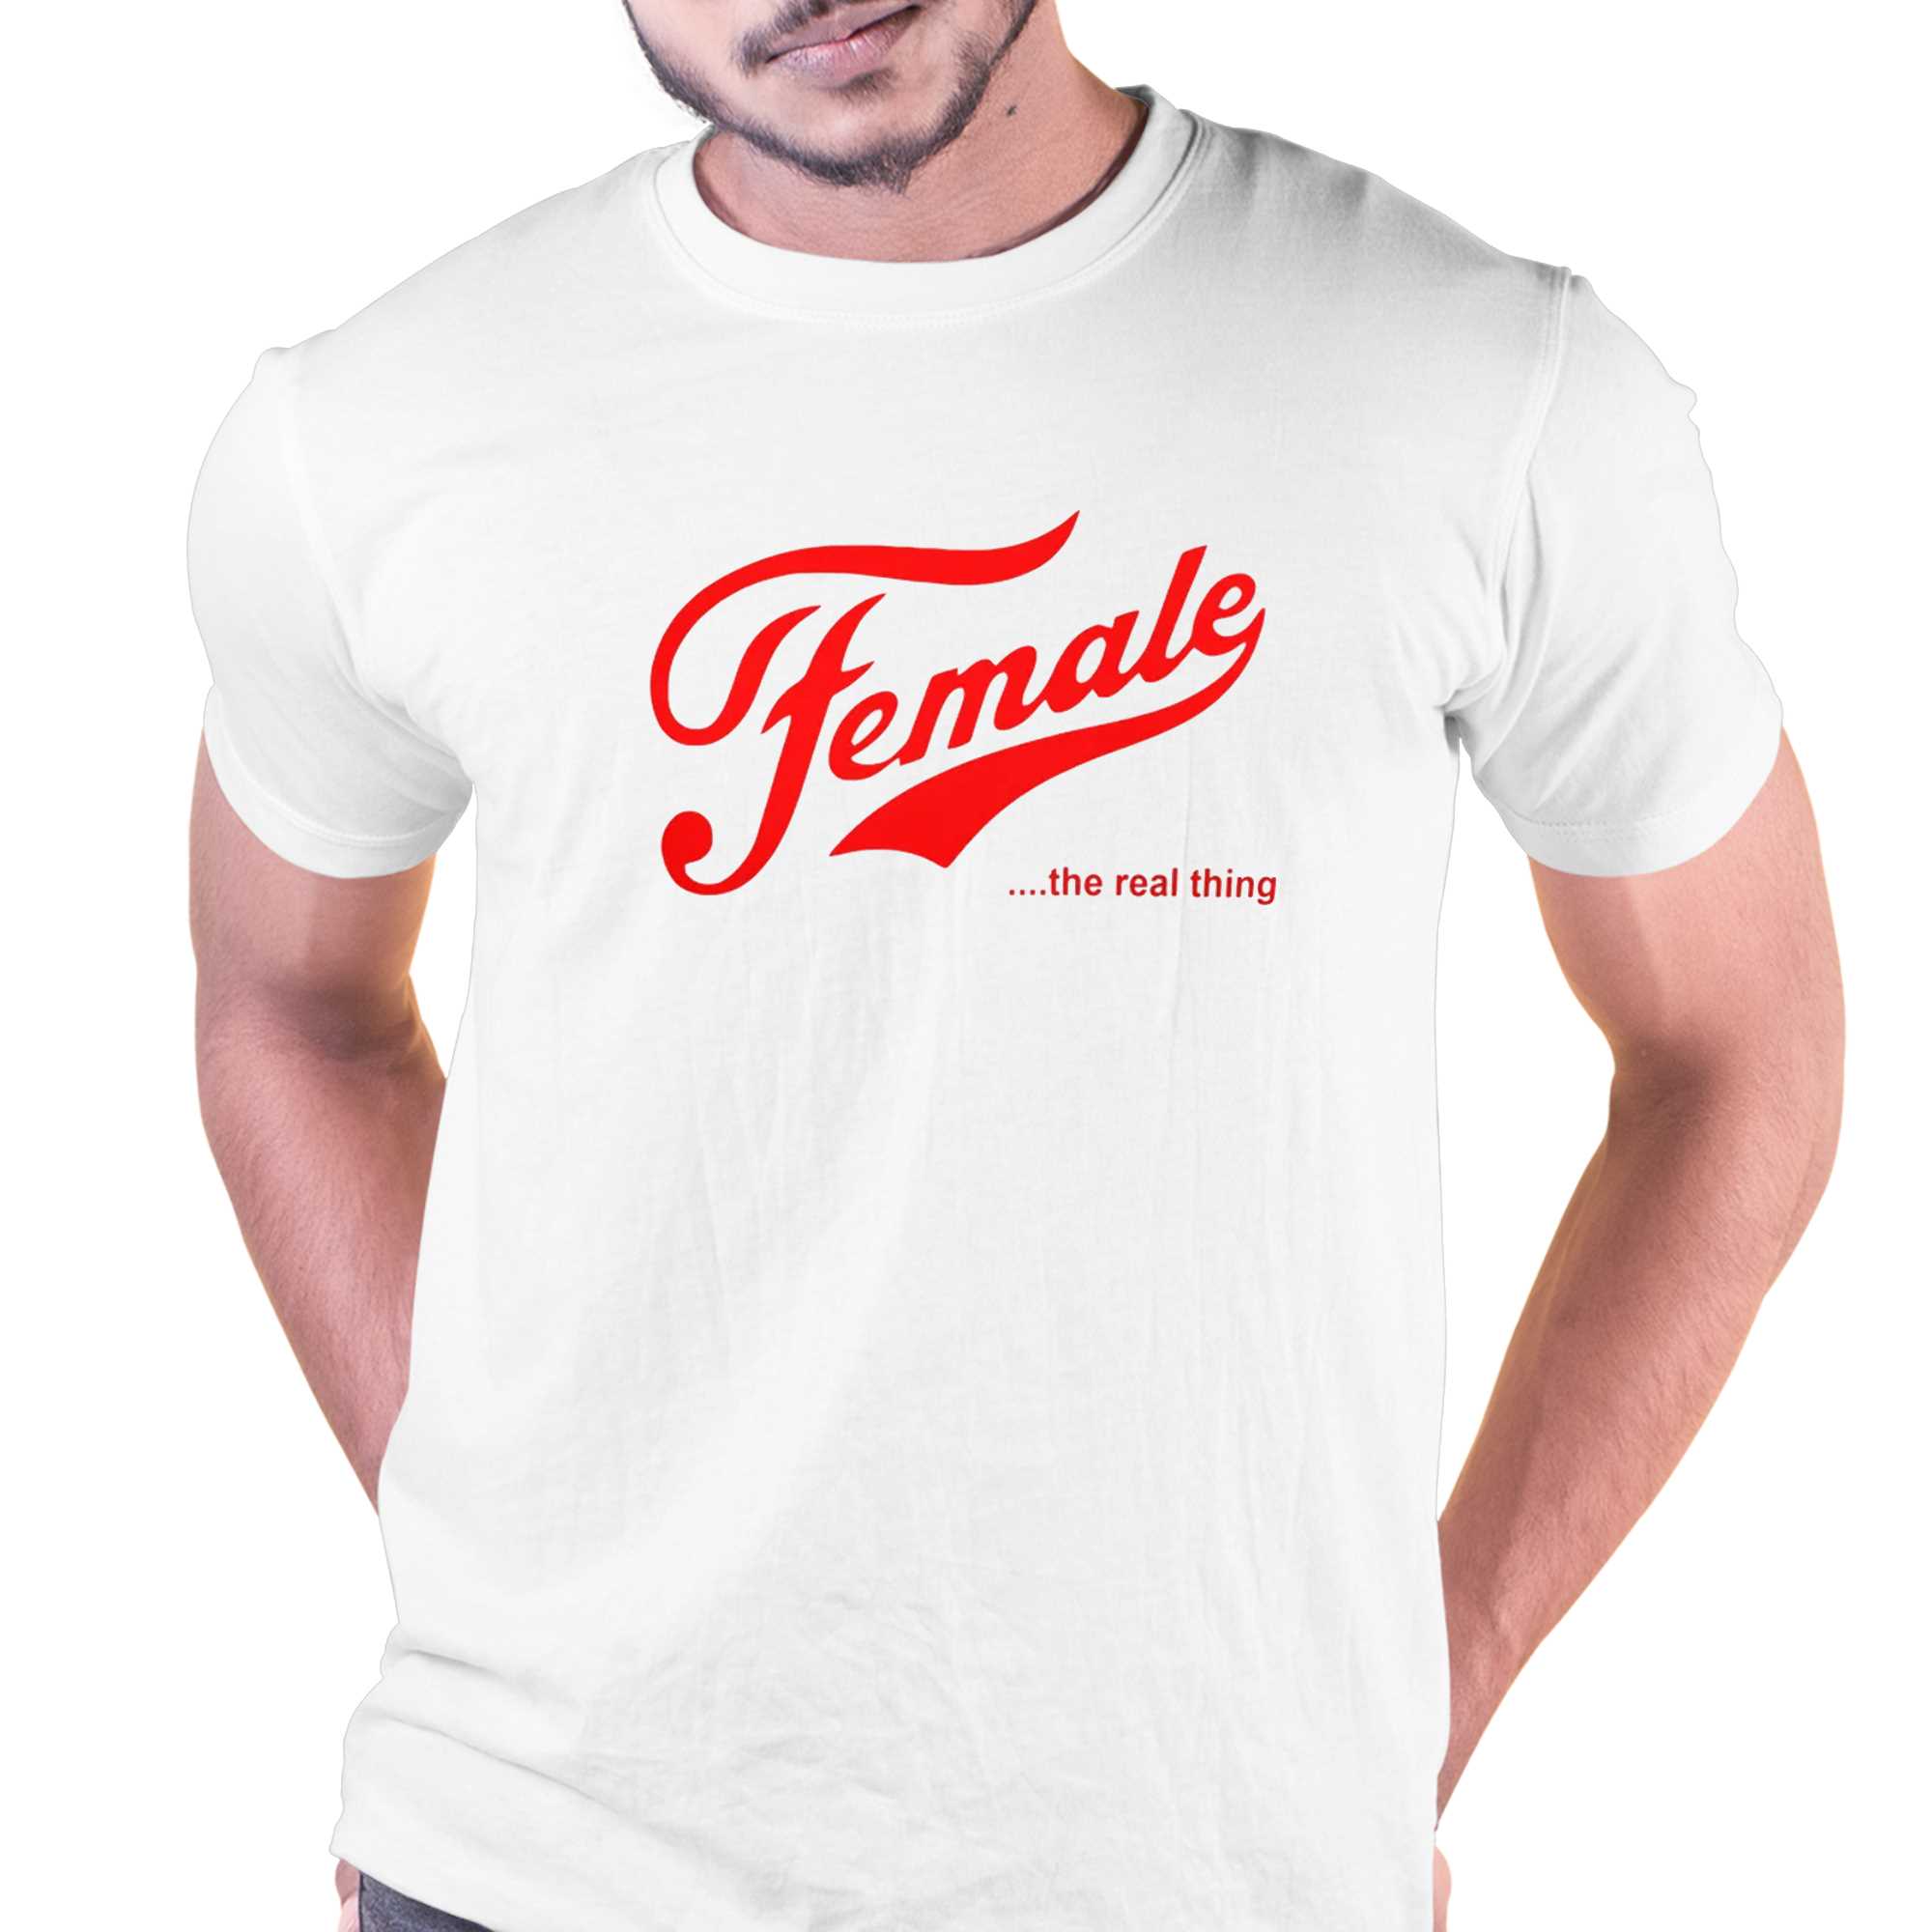 megyn kellys female the real thing shirt 1 1